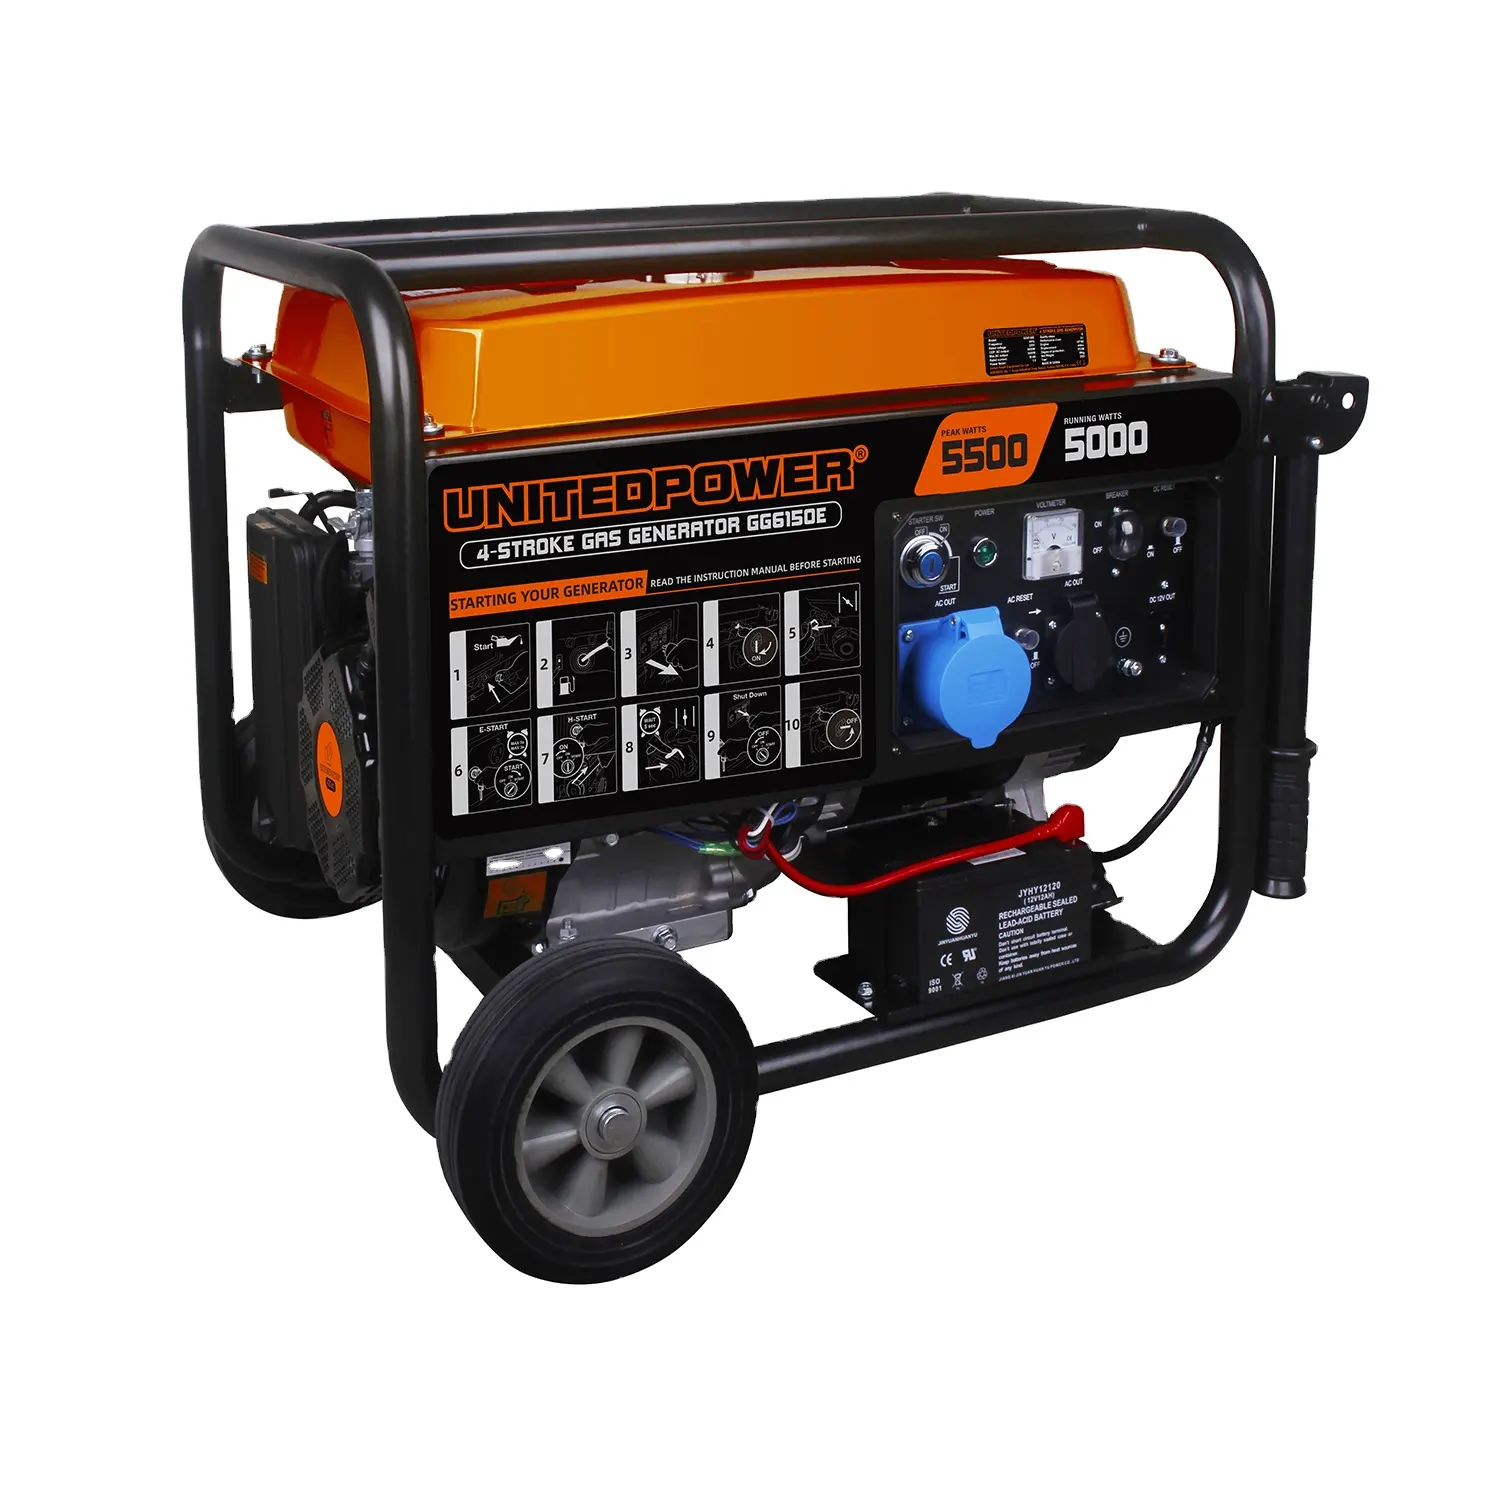 Generator Manufacturer 5kw 8kw 10kw 12kw Petrol Honda Engine Portable Electricity welding generator for house